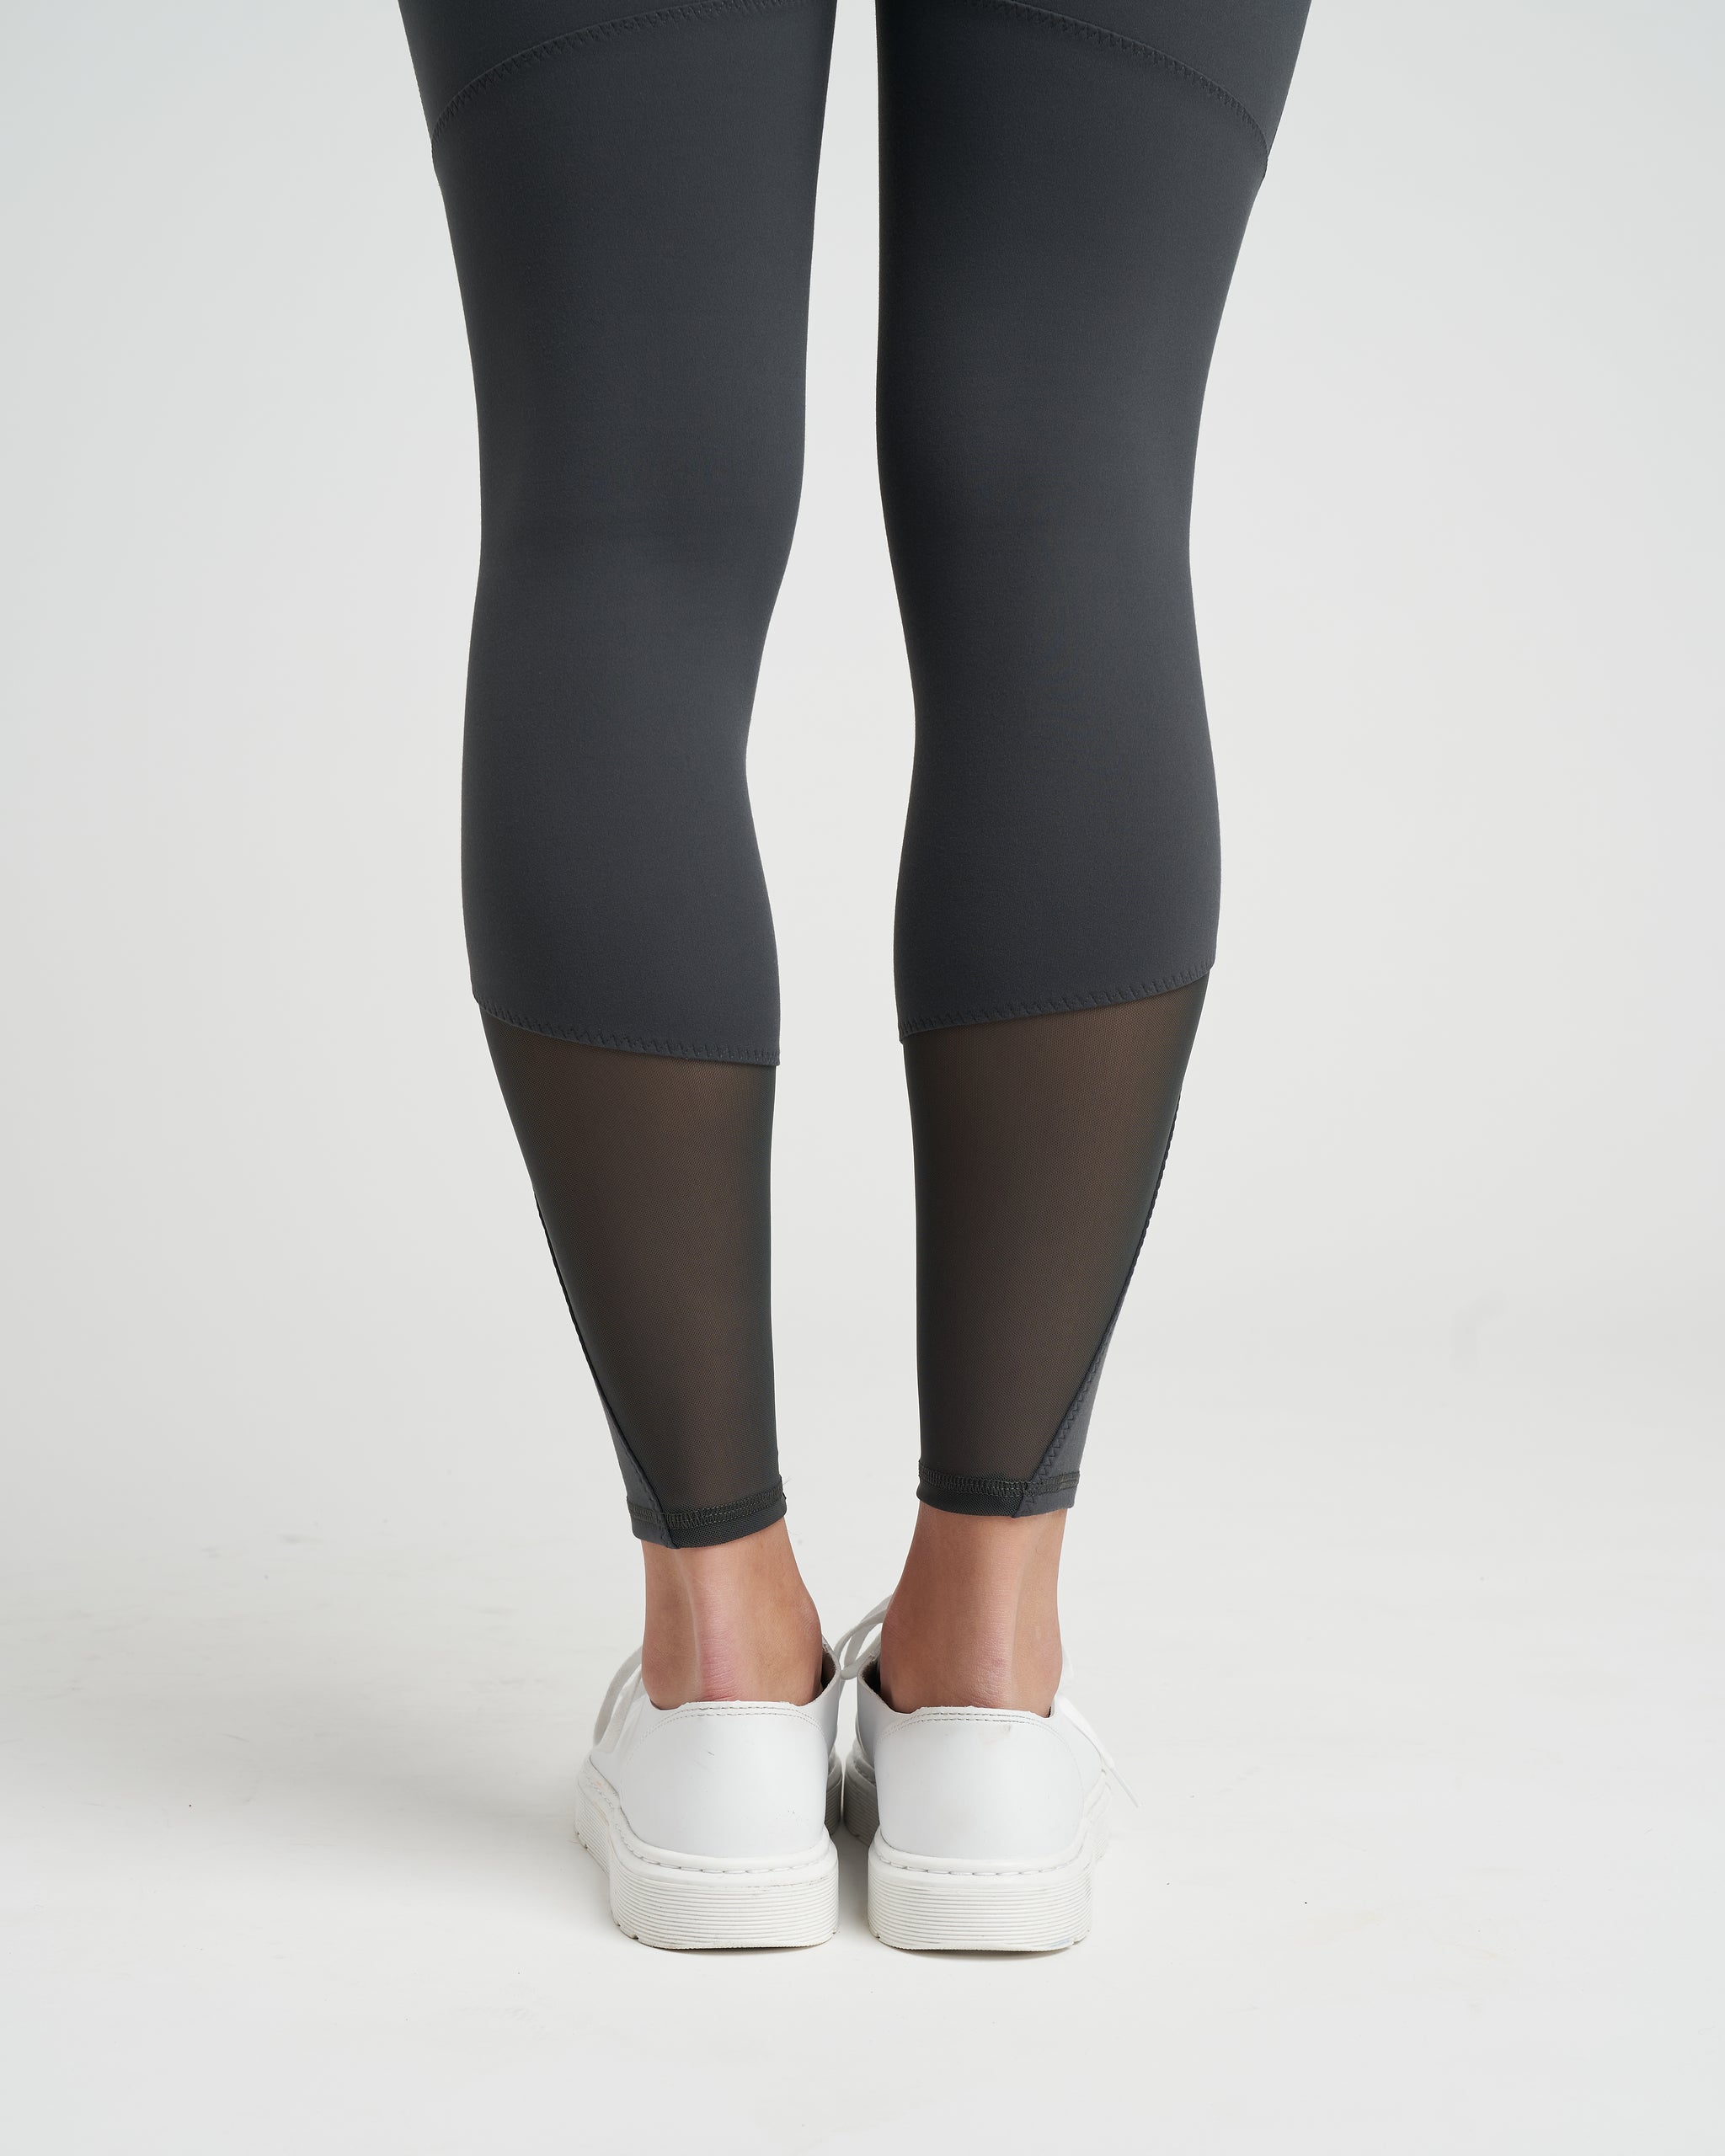 Buy LGC Viscose Lycra Off white Legging for Women (Size: XL) at